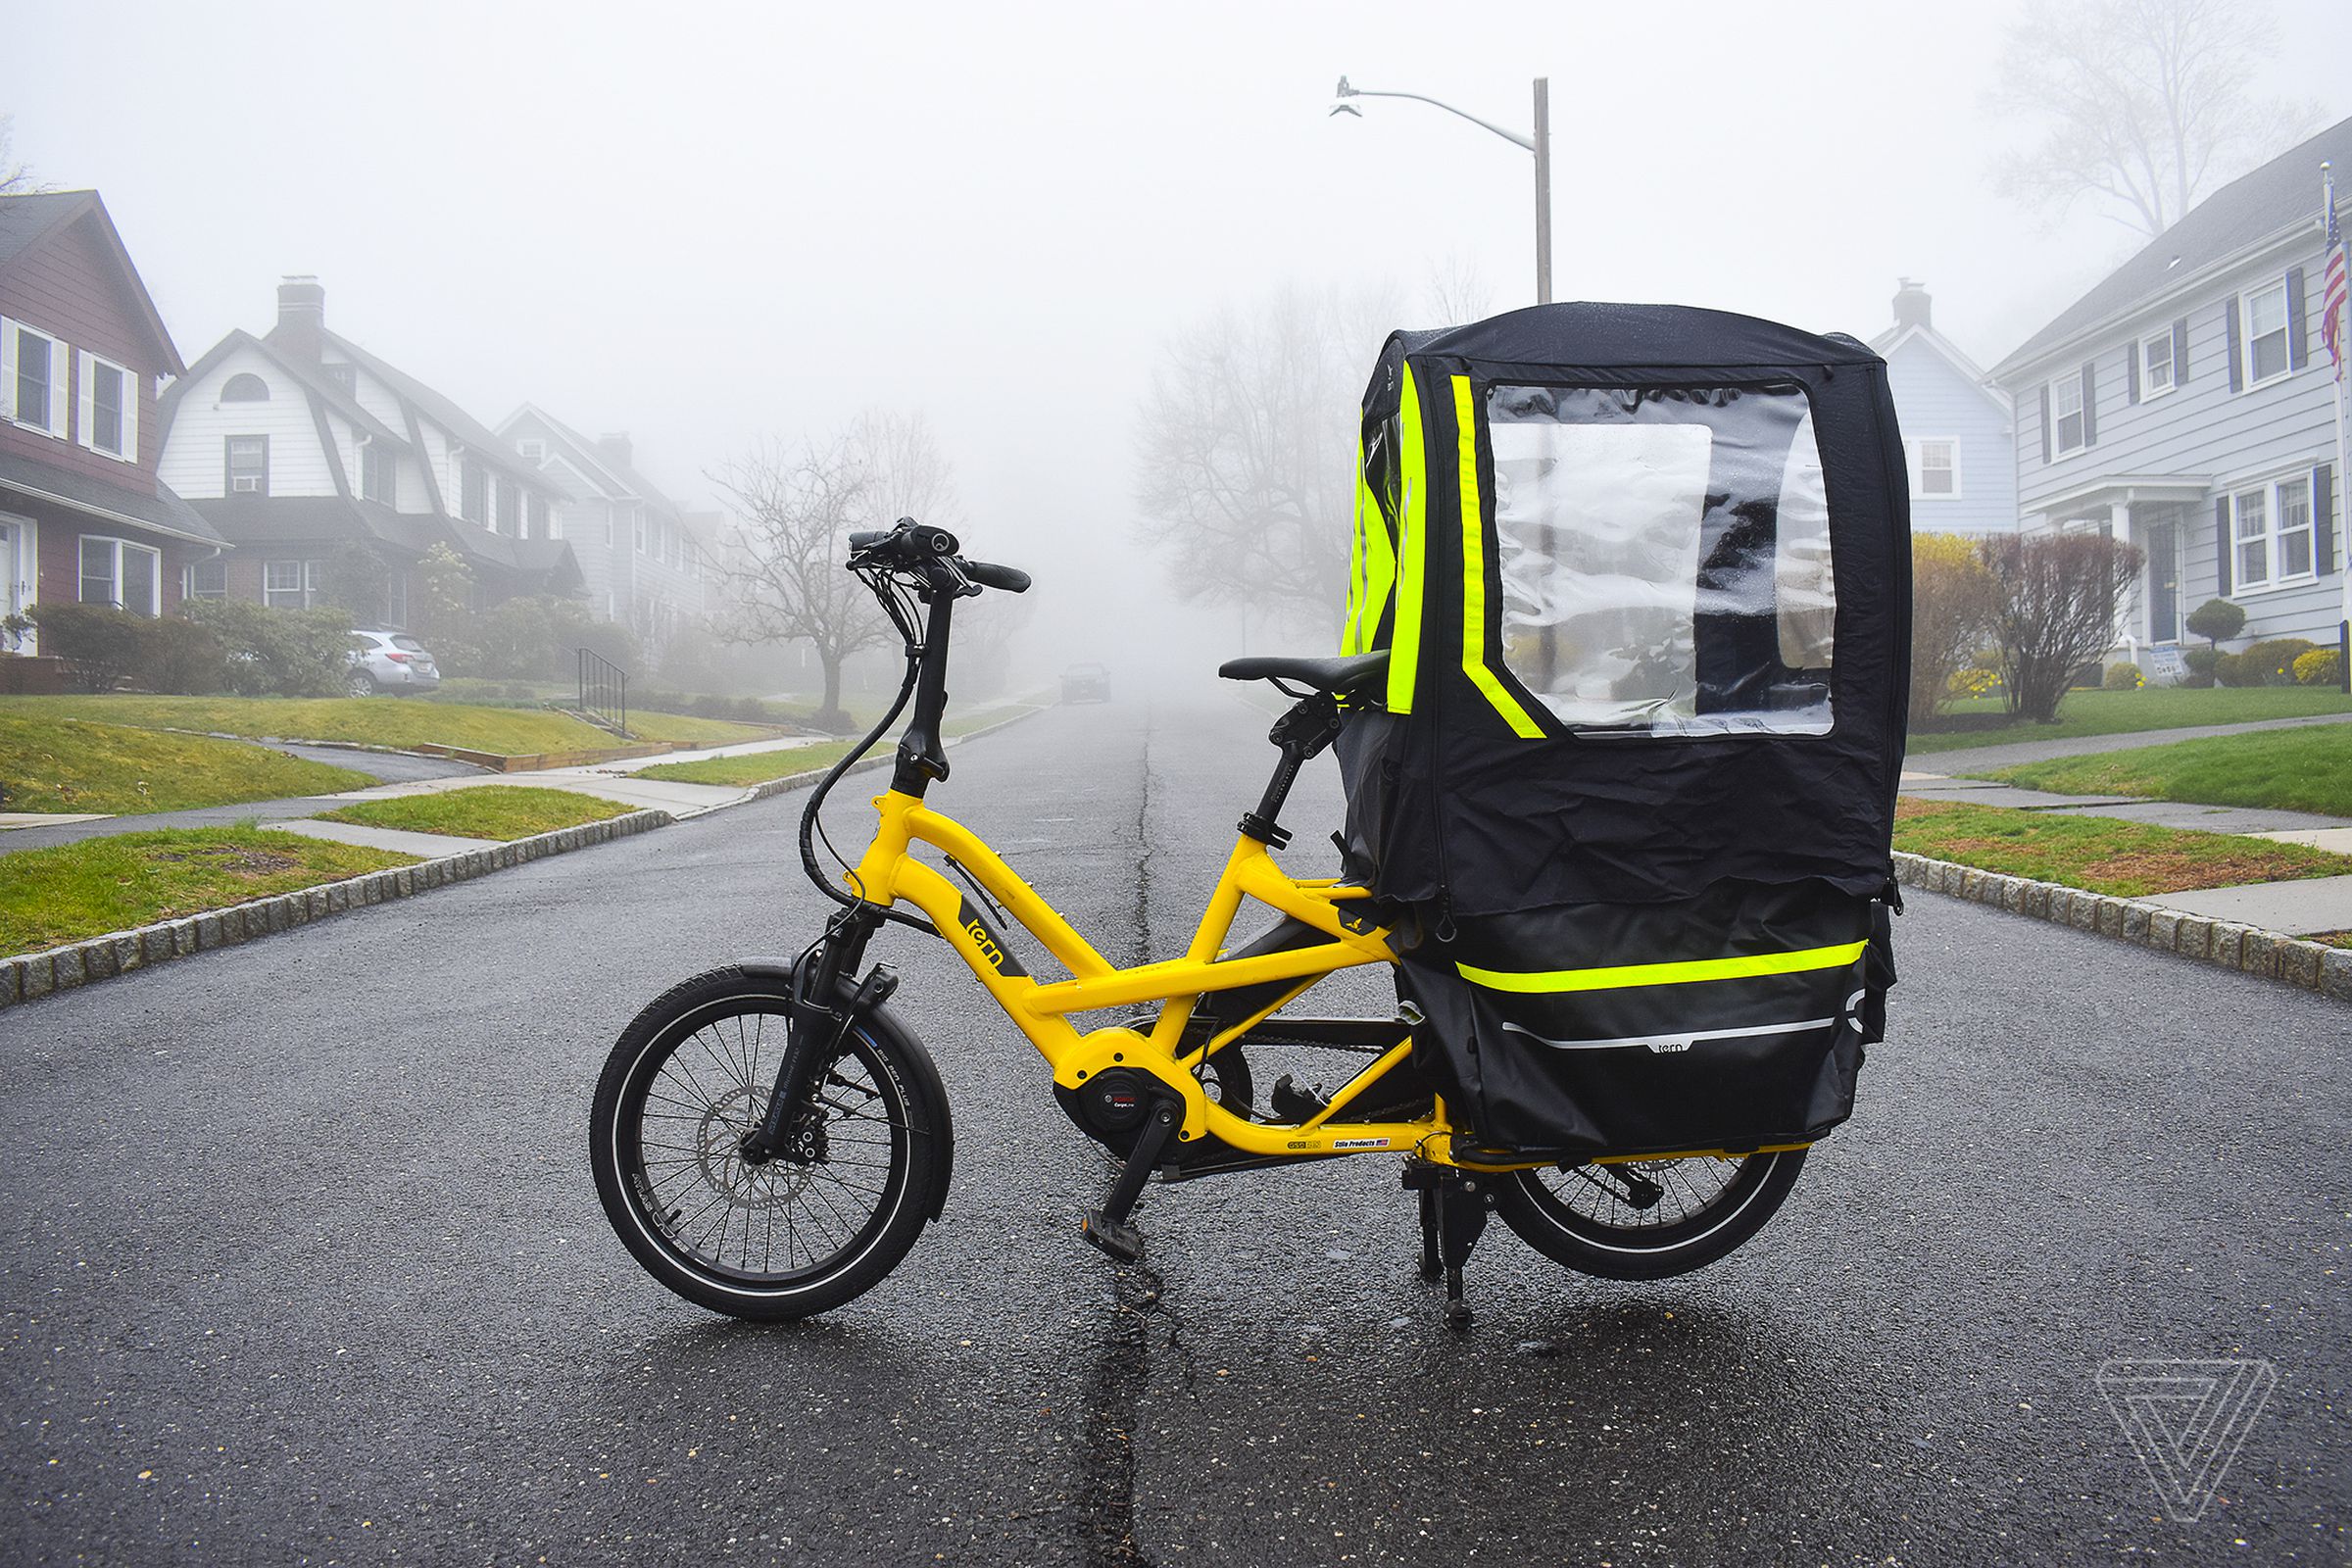 This all-weather bike makes biking year-round more pleasurable.